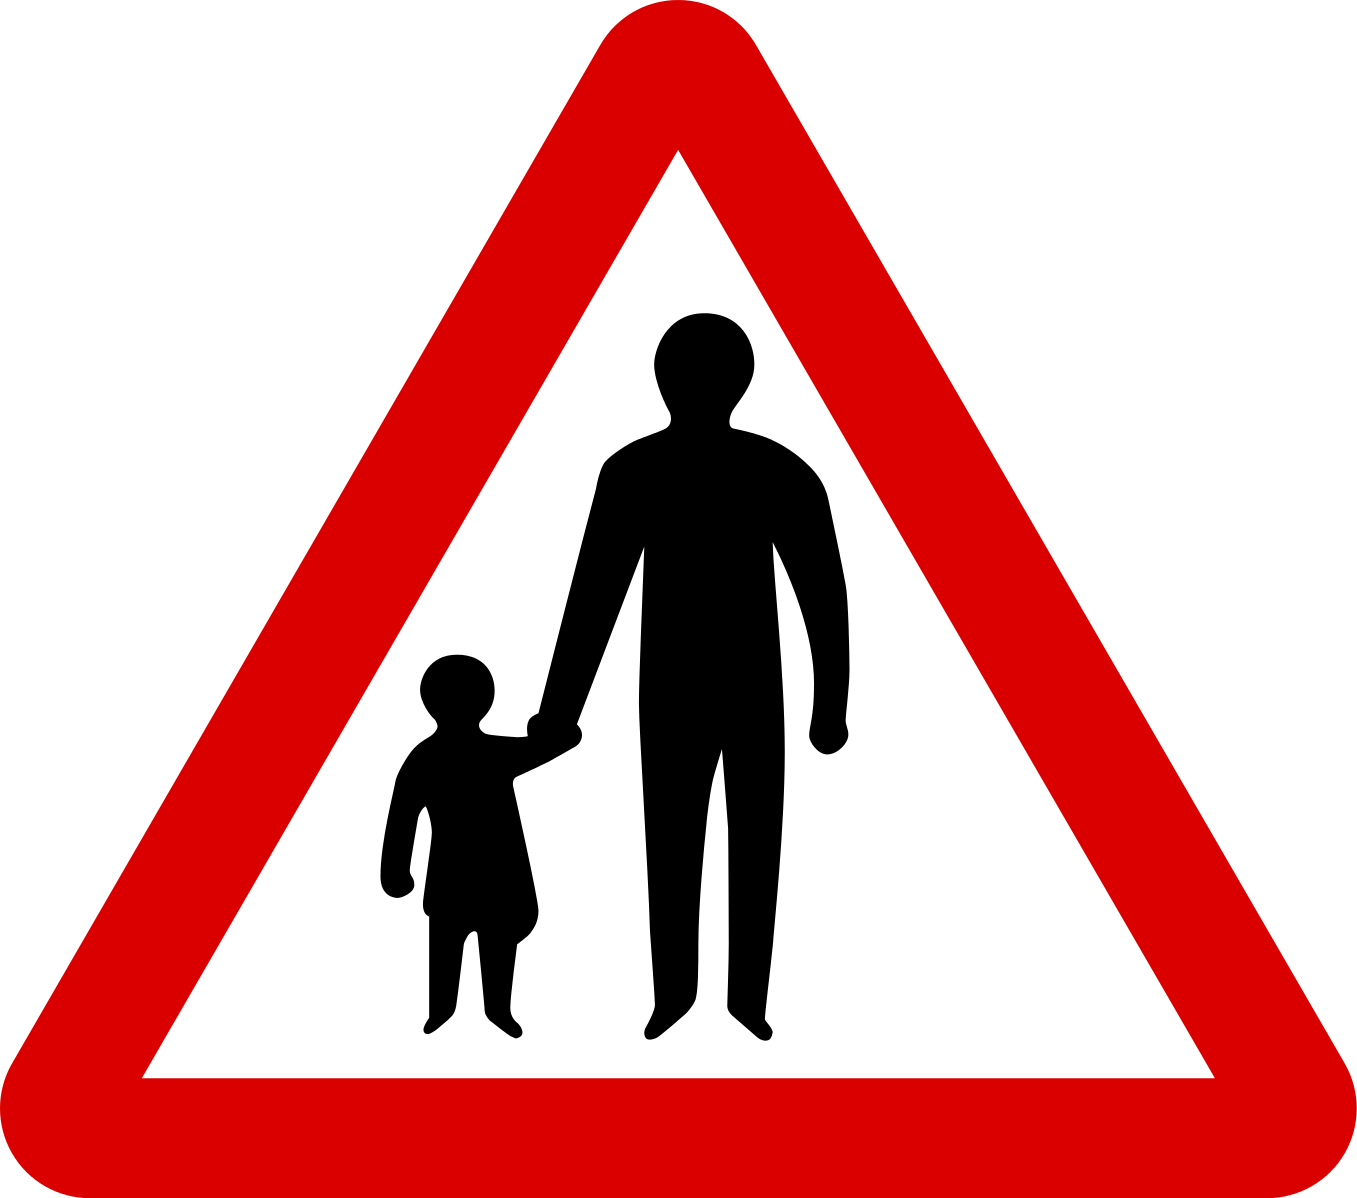 Pedestrians on road ahead